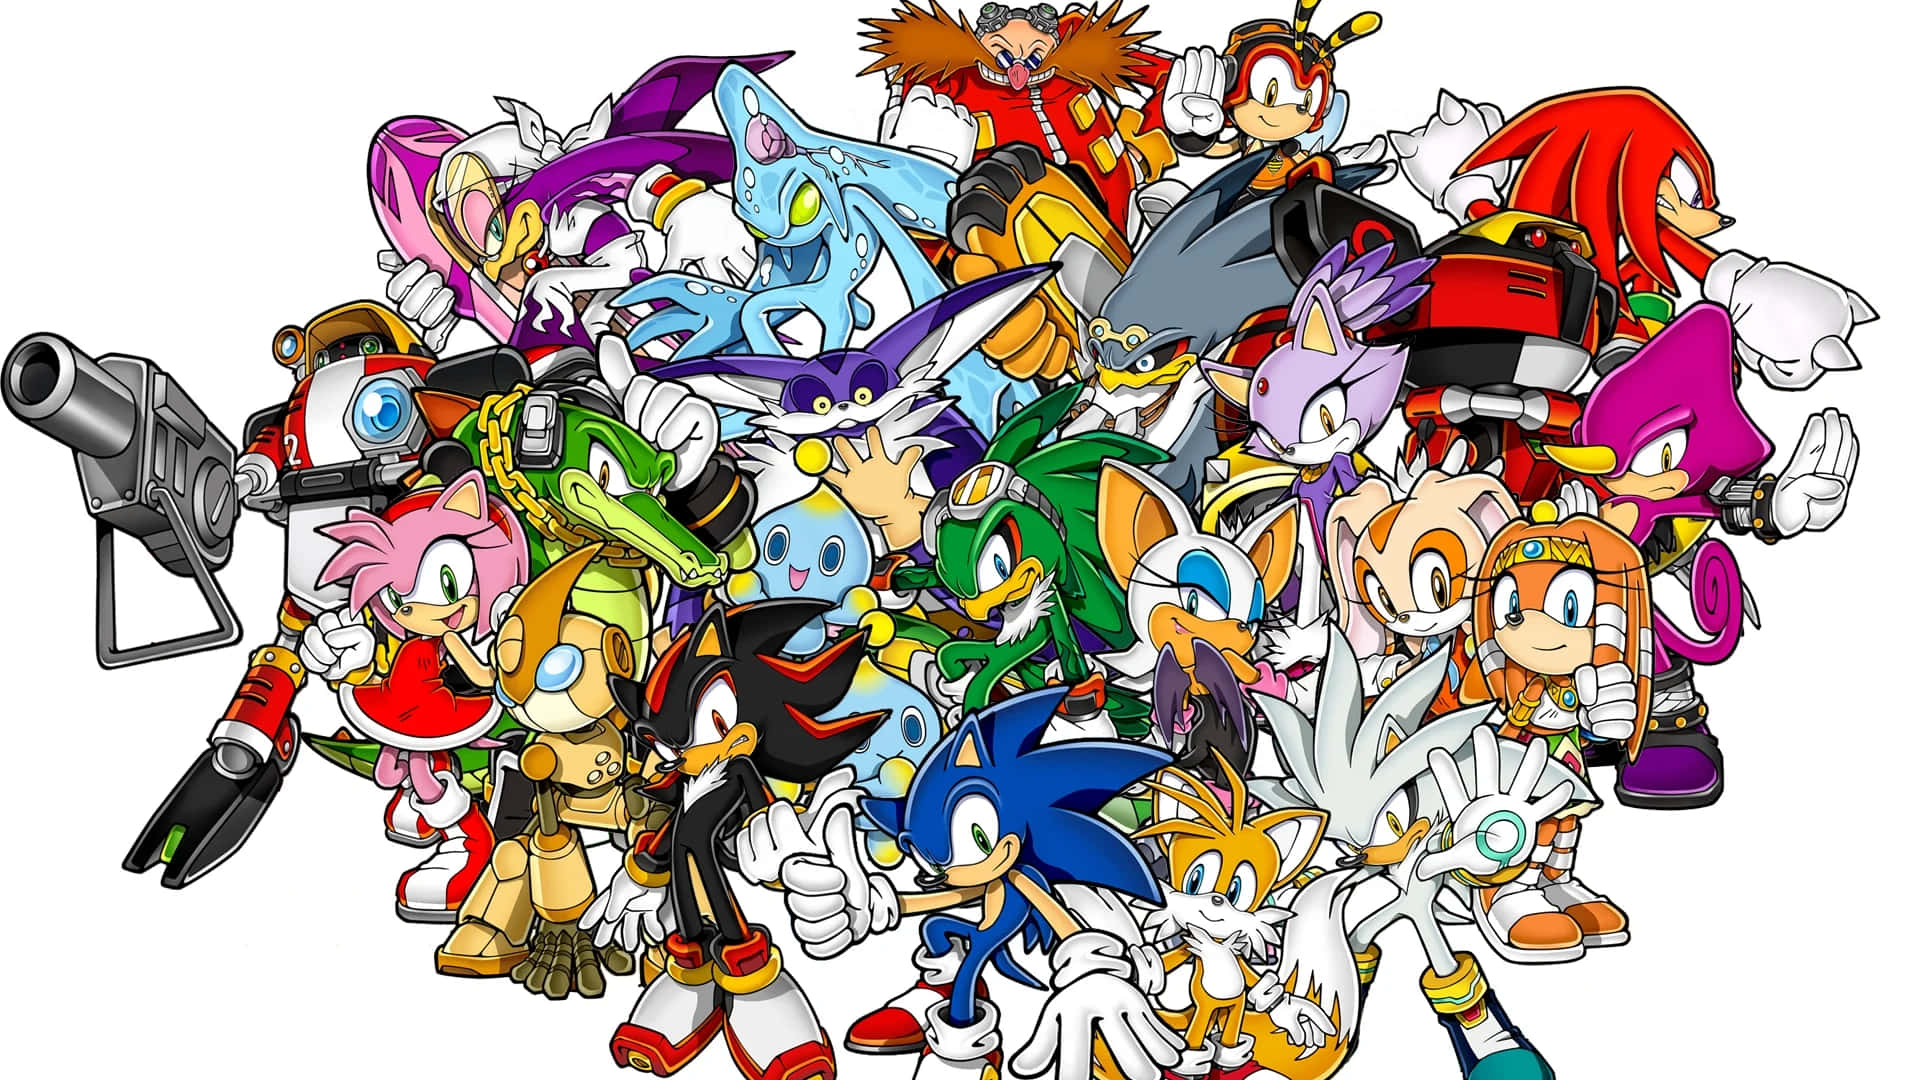 Sonic x hedgehog. Команда Соника Икс. Соник Икс вся команда. Соник персонажи. Соник и его команда.